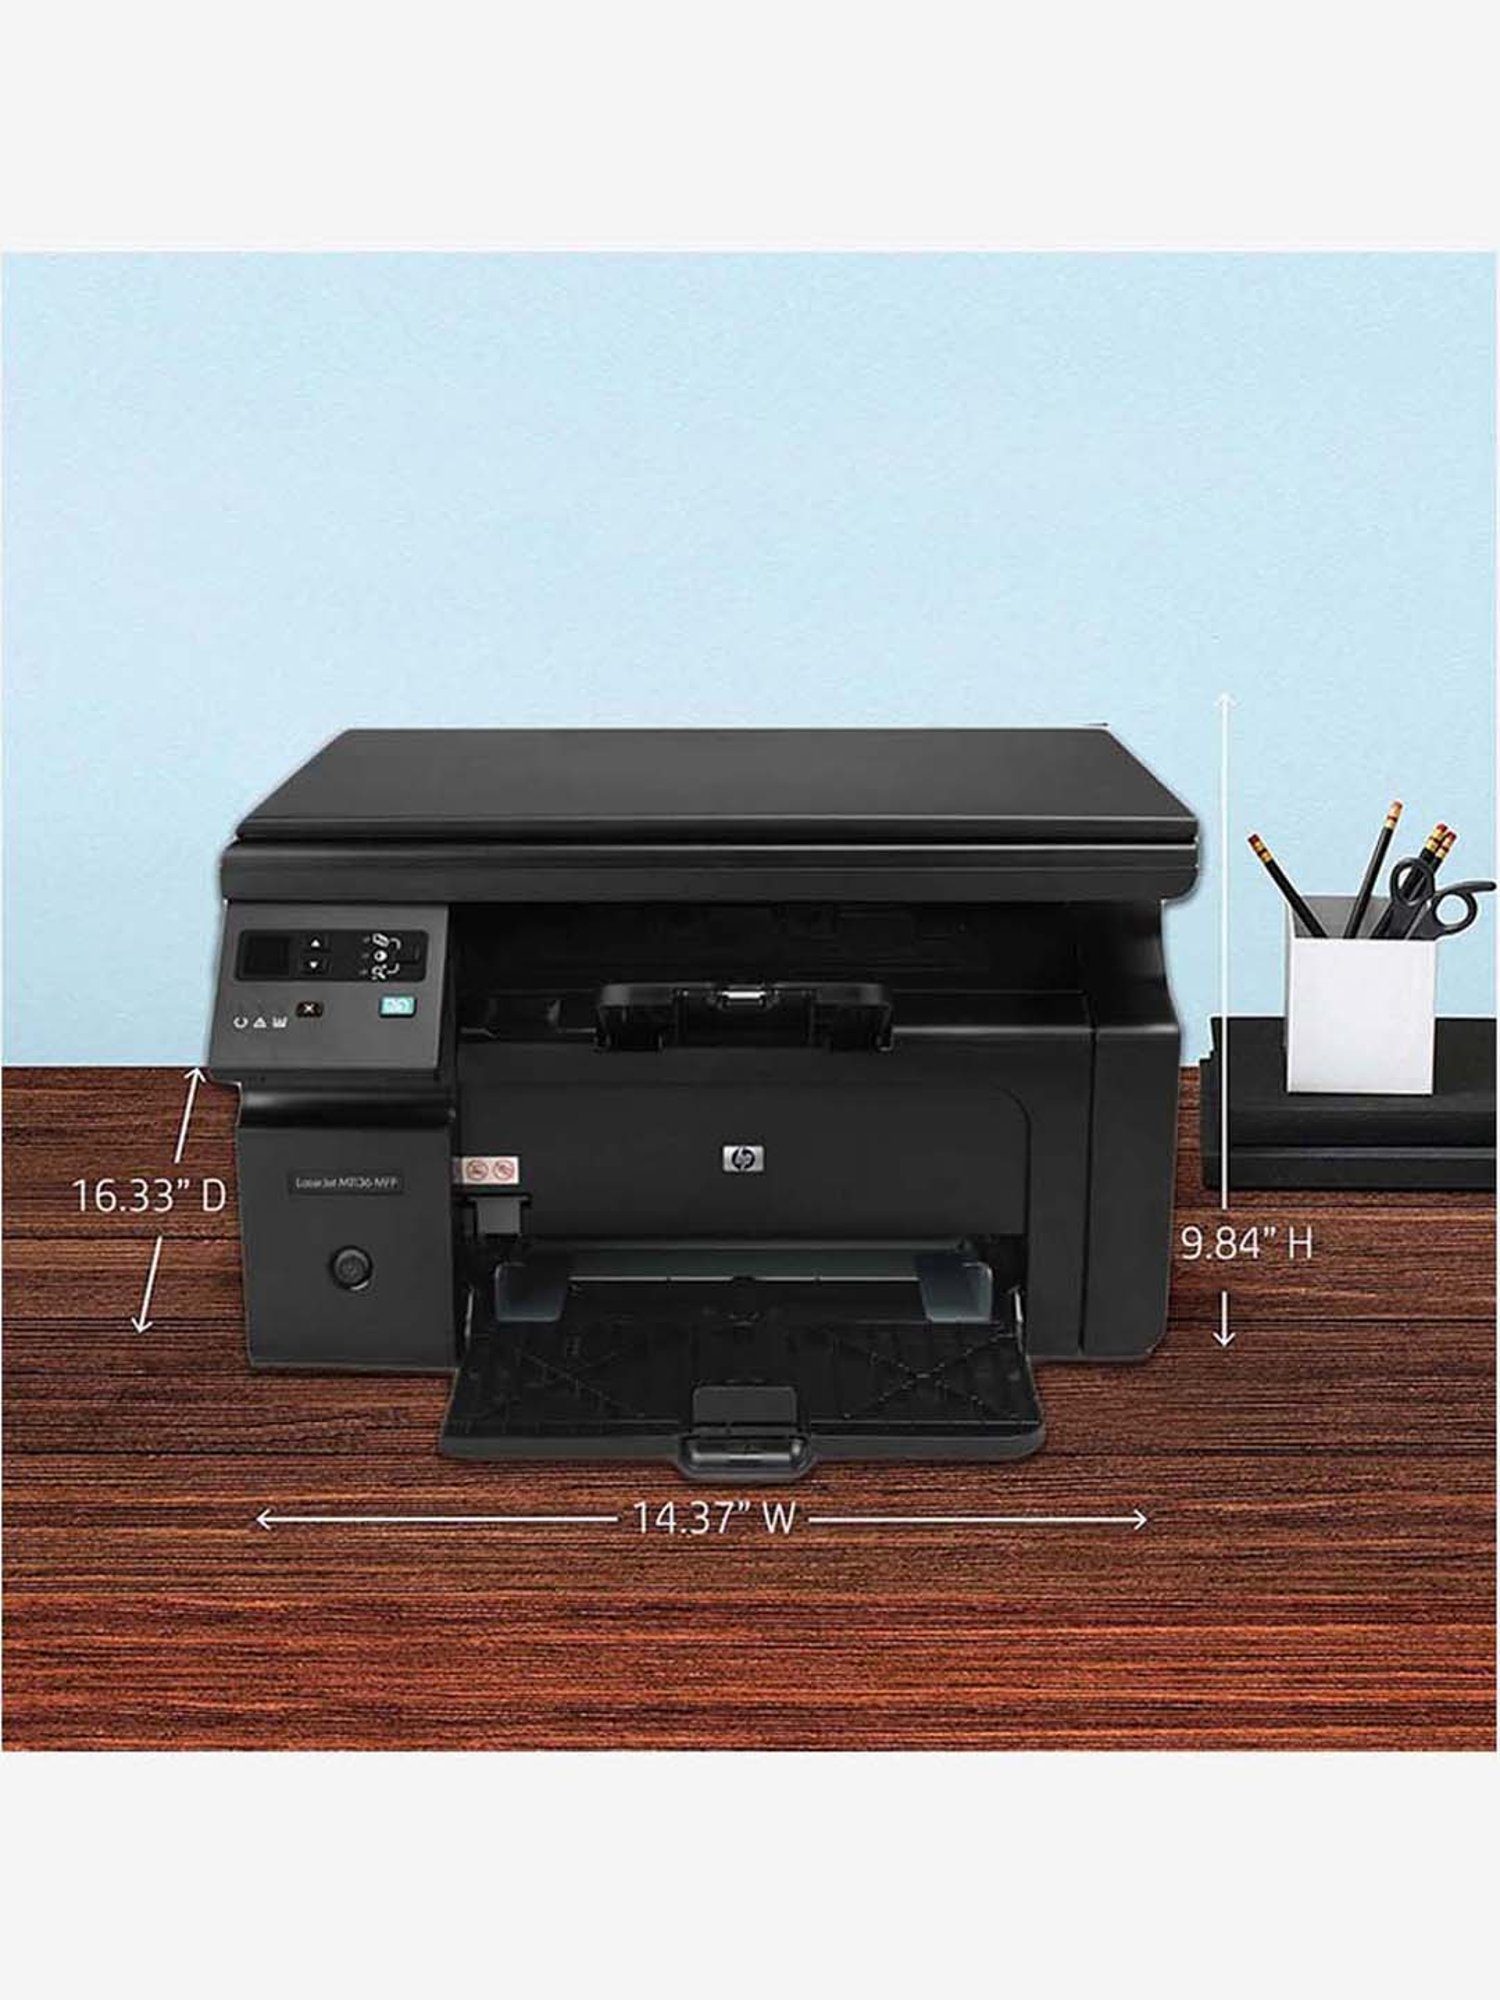 Buy Hp Laserjet Pro M1136 Laser Printer Black Online At Best Prices Tata Cliq